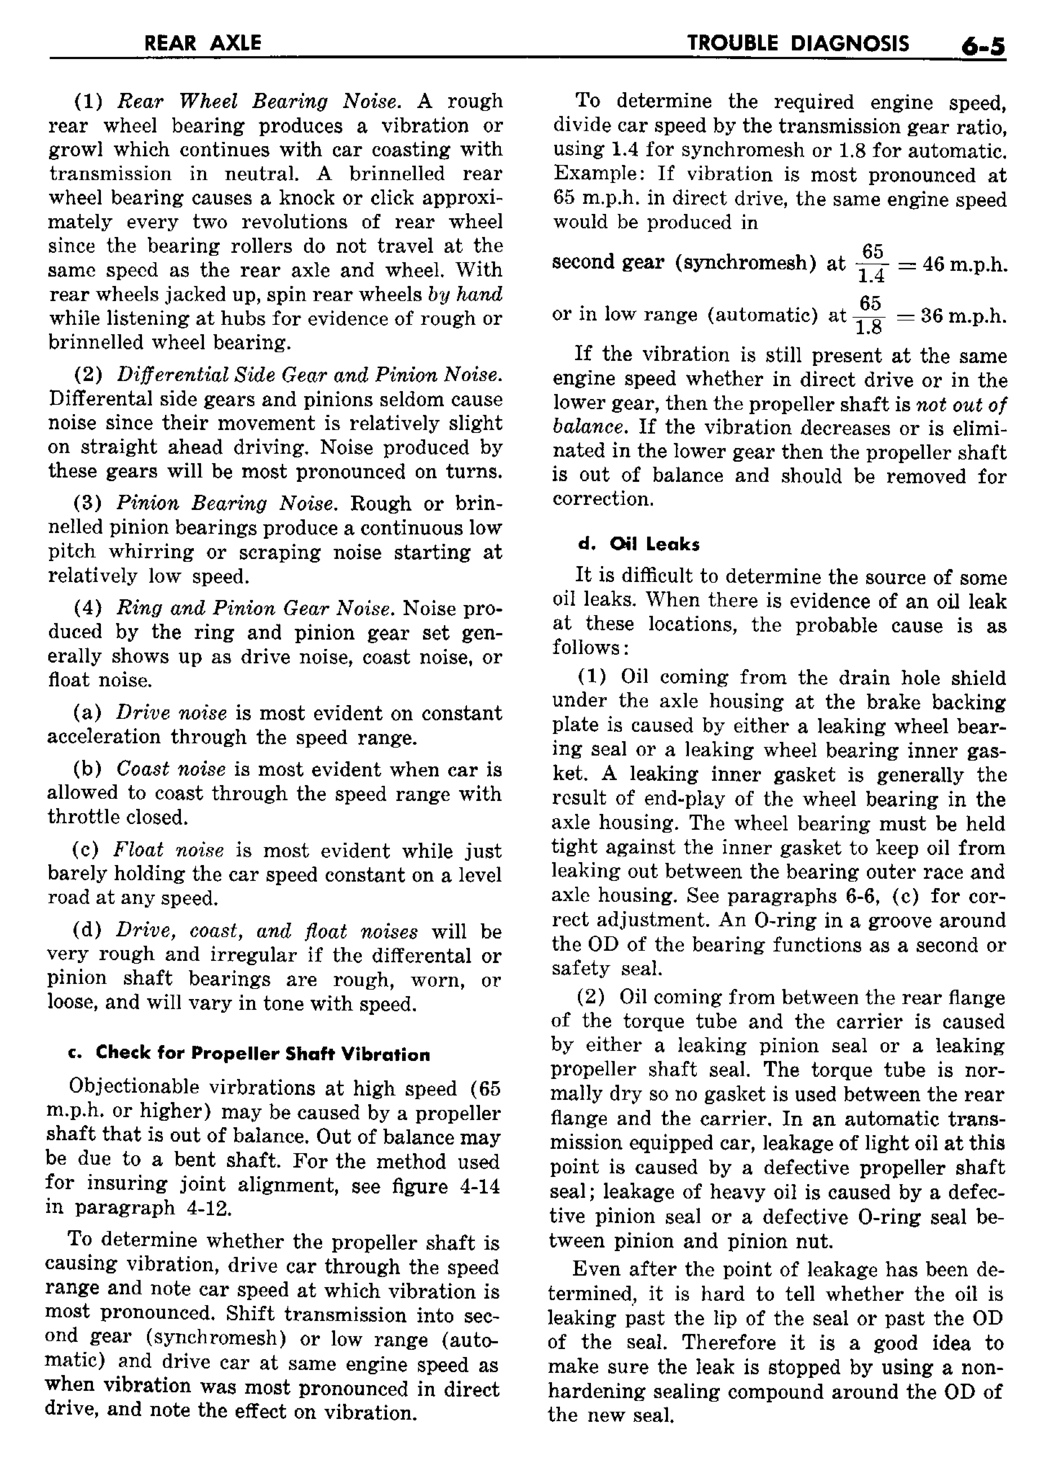 n_07 1960 Buick Shop Manual - Rear Axle-005-005.jpg